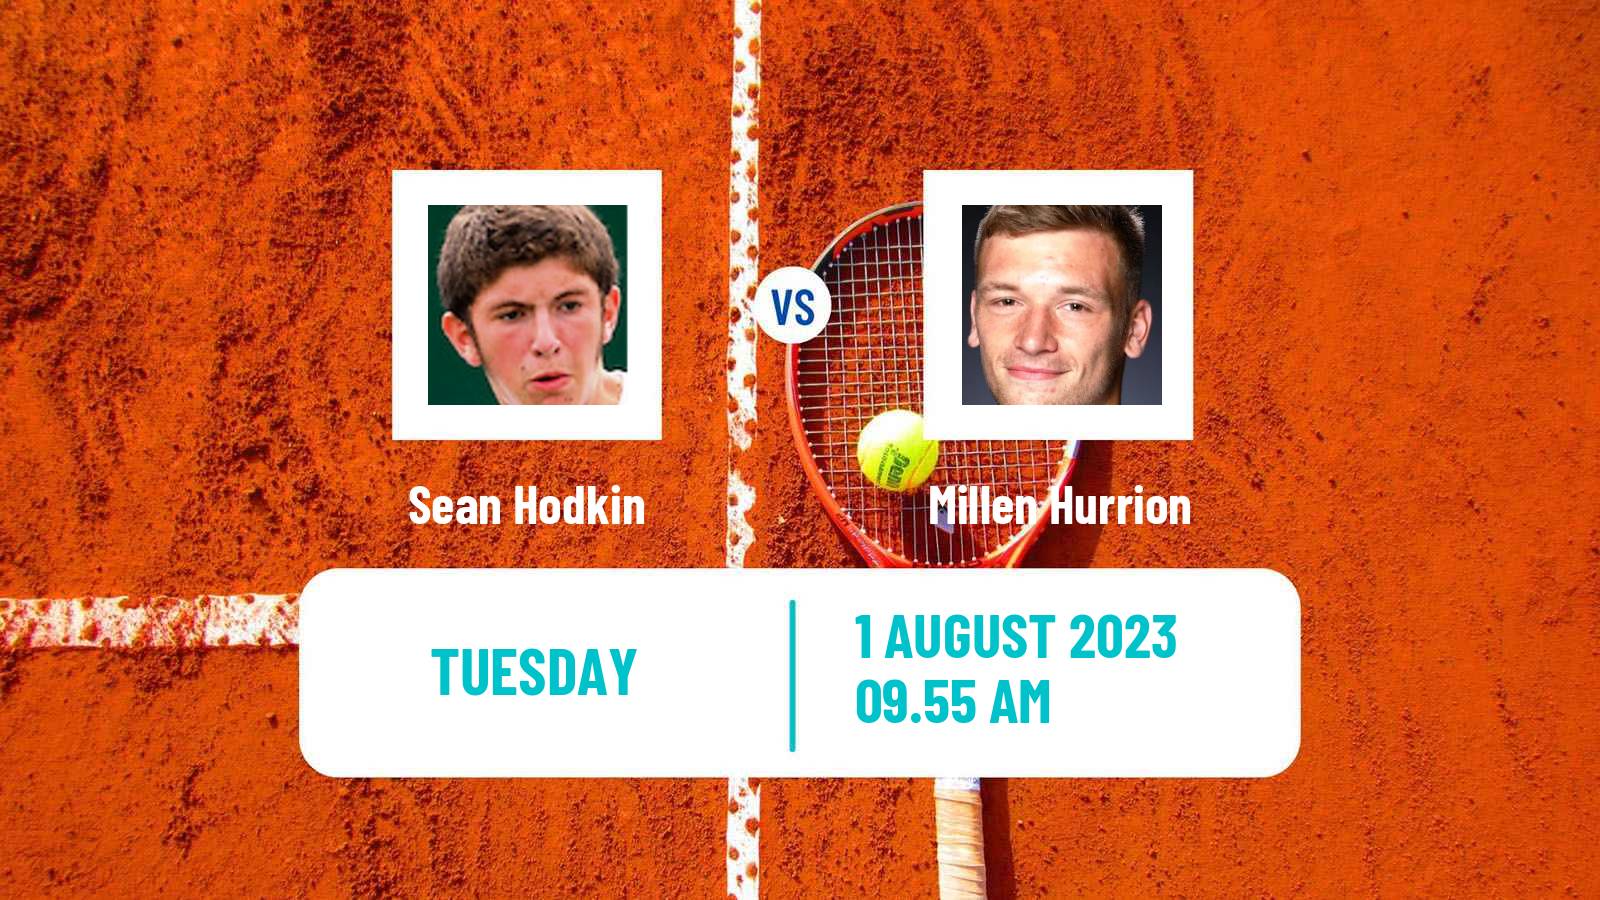 Tennis ITF M25 Roehampton 3 Men Sean Hodkin - Millen Hurrion